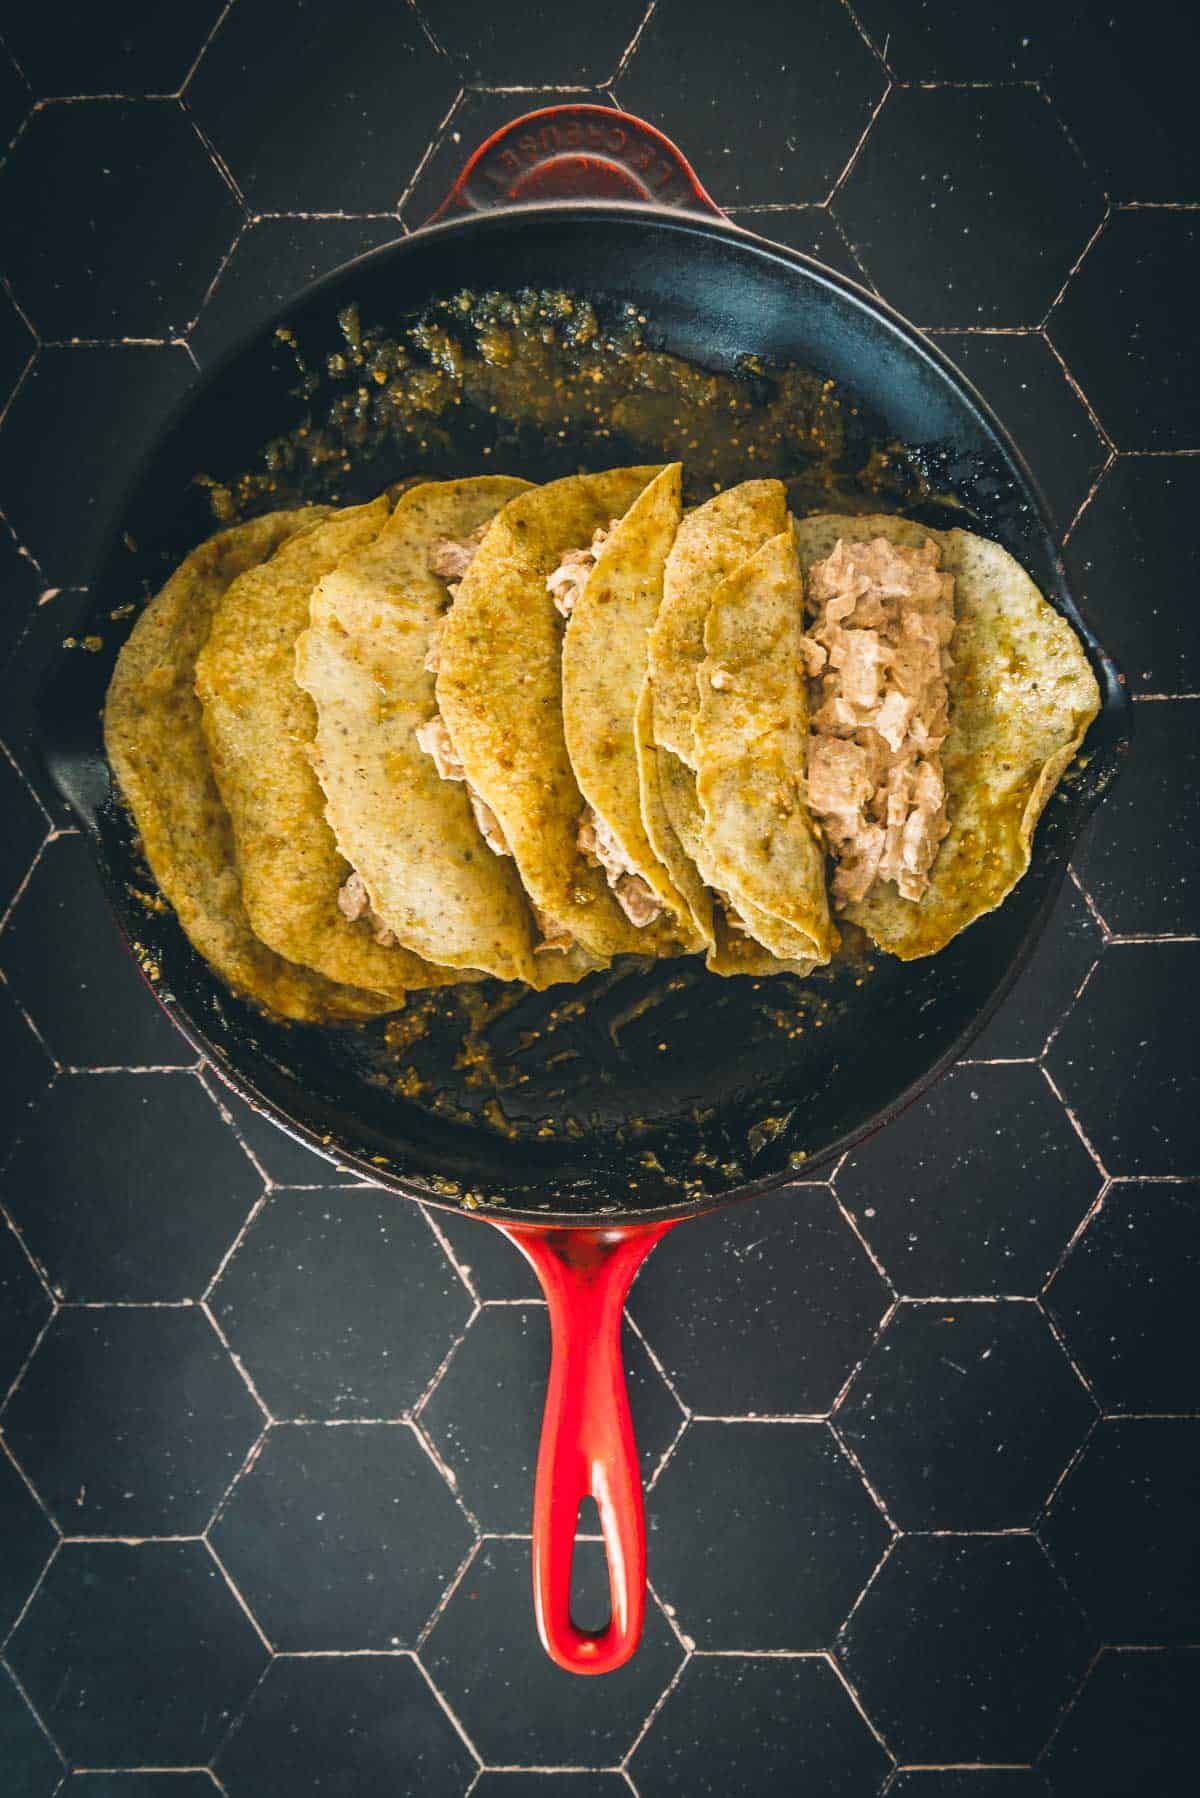 Tortillas in a frying pan on a black tiled floor.